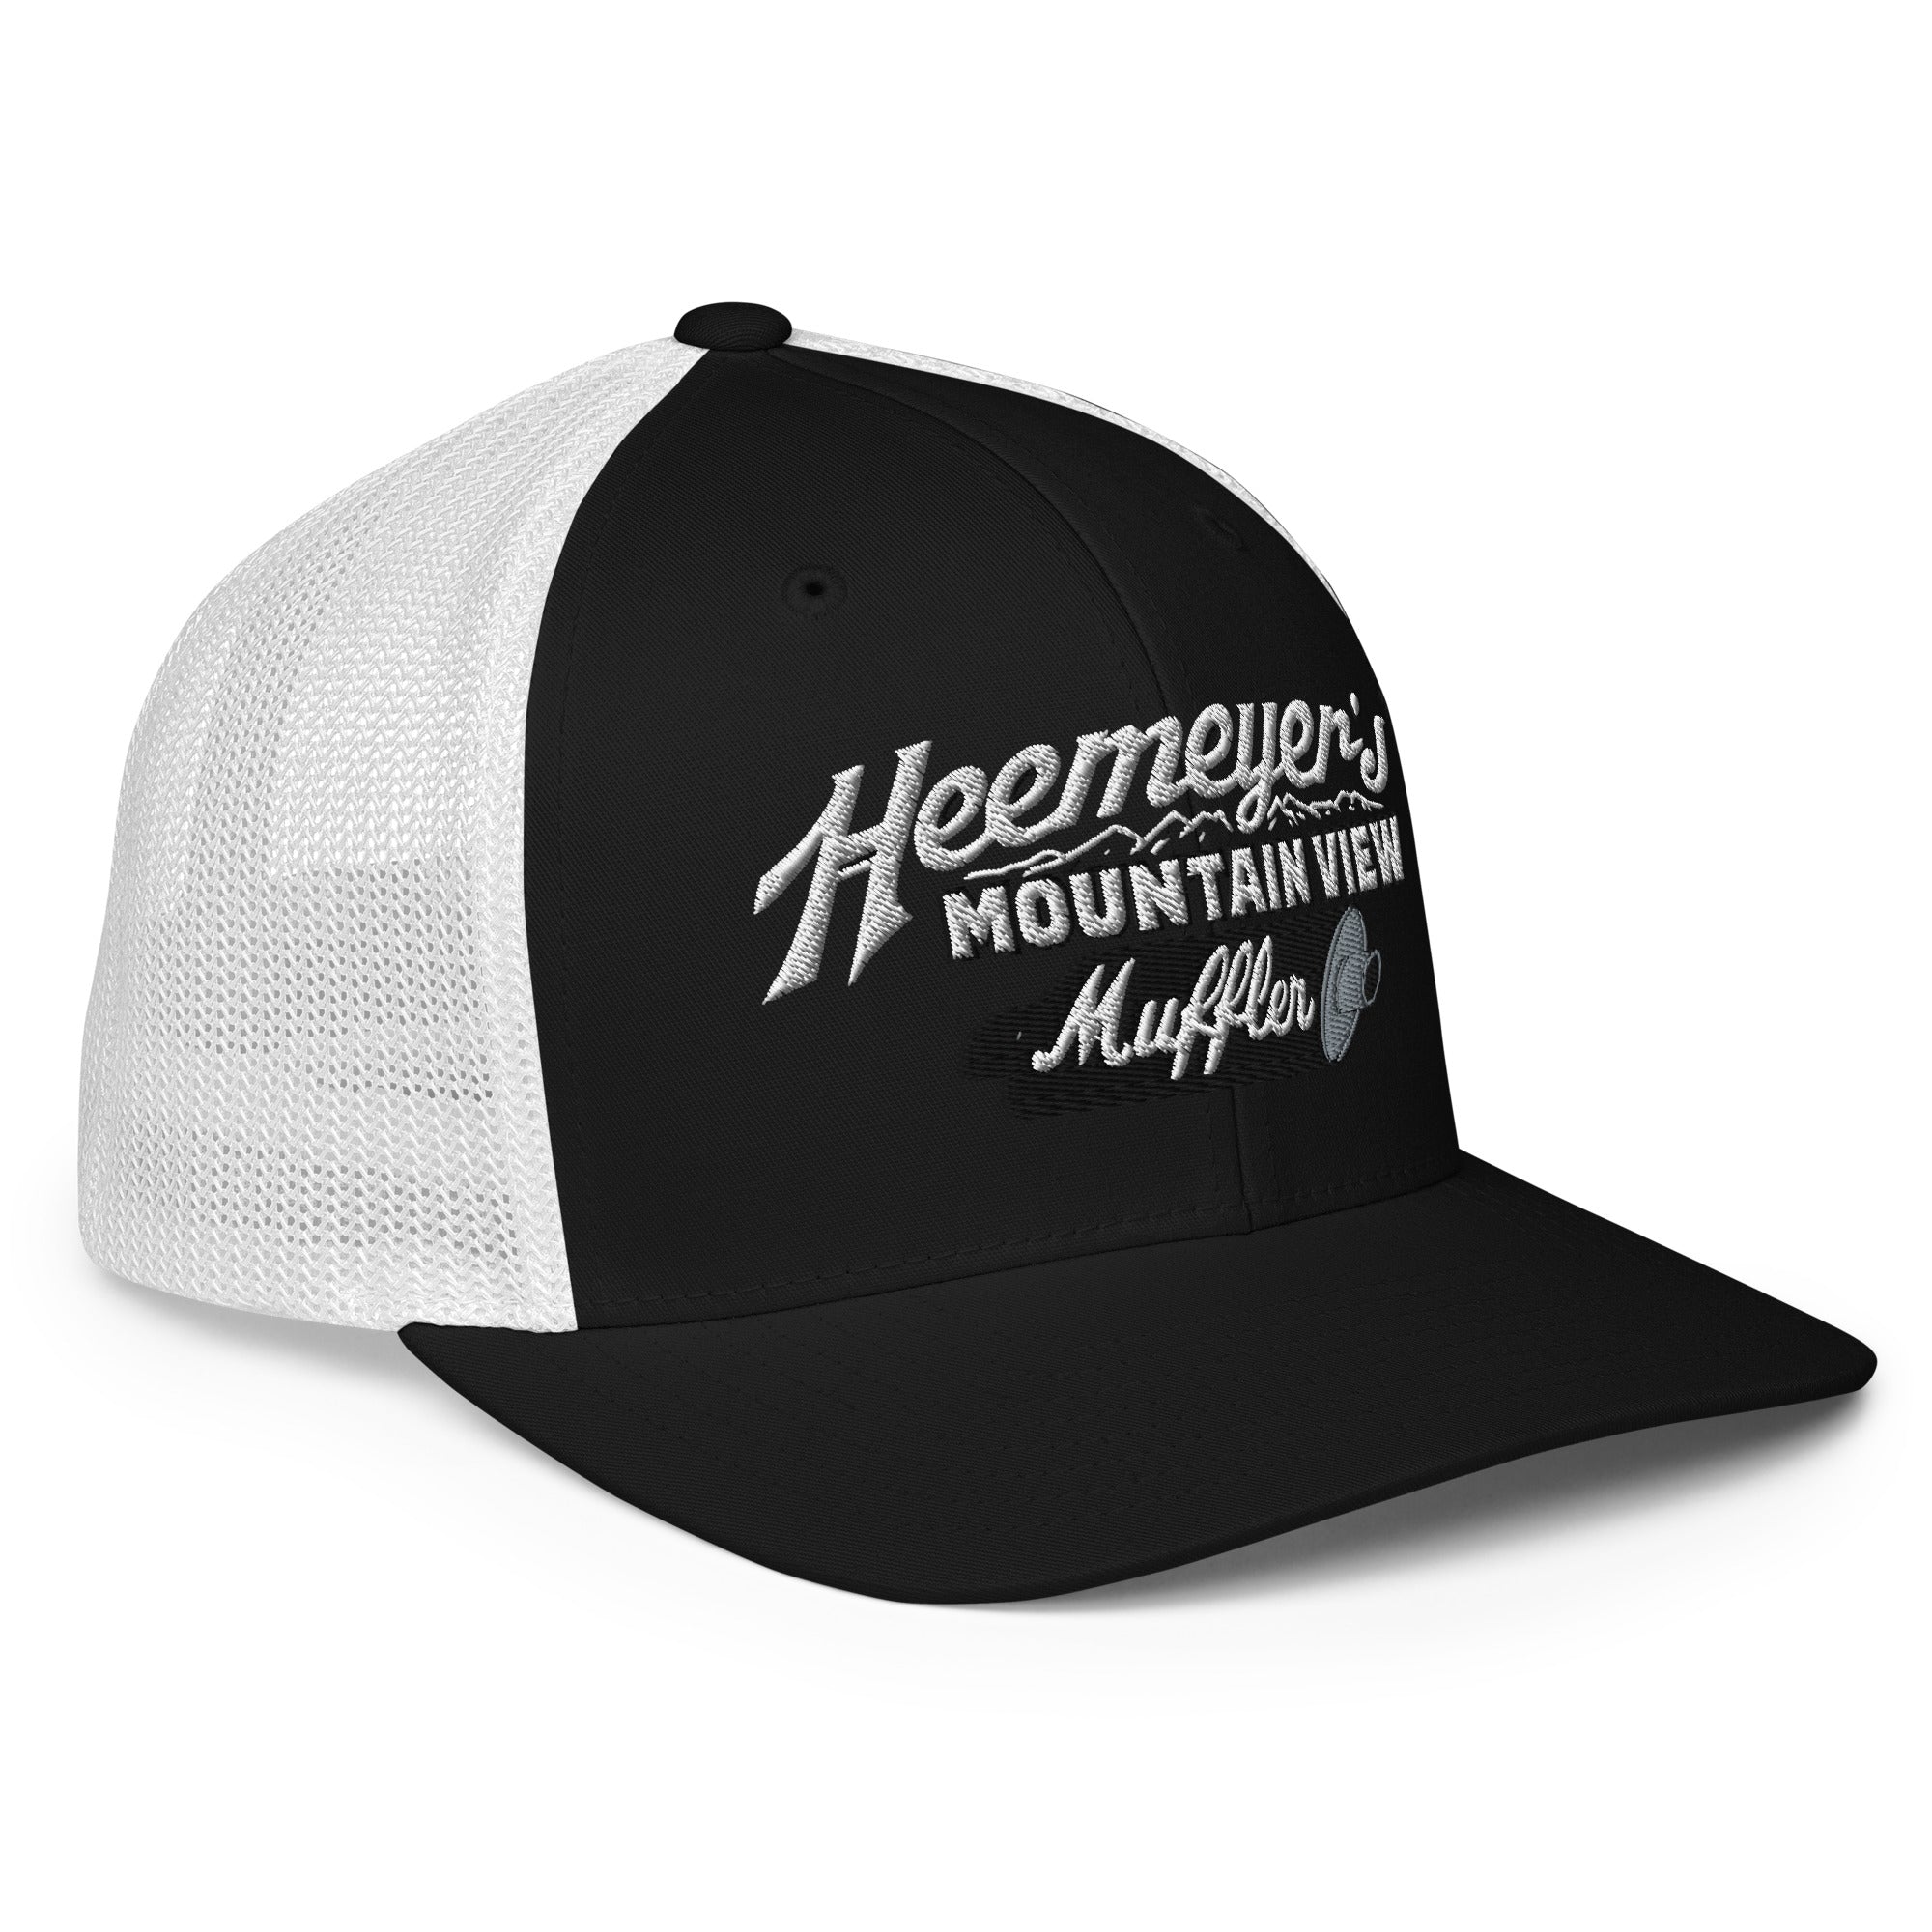 Heemeyer's Mountain View Muffler Flexfit Permacurve Trucker Cap